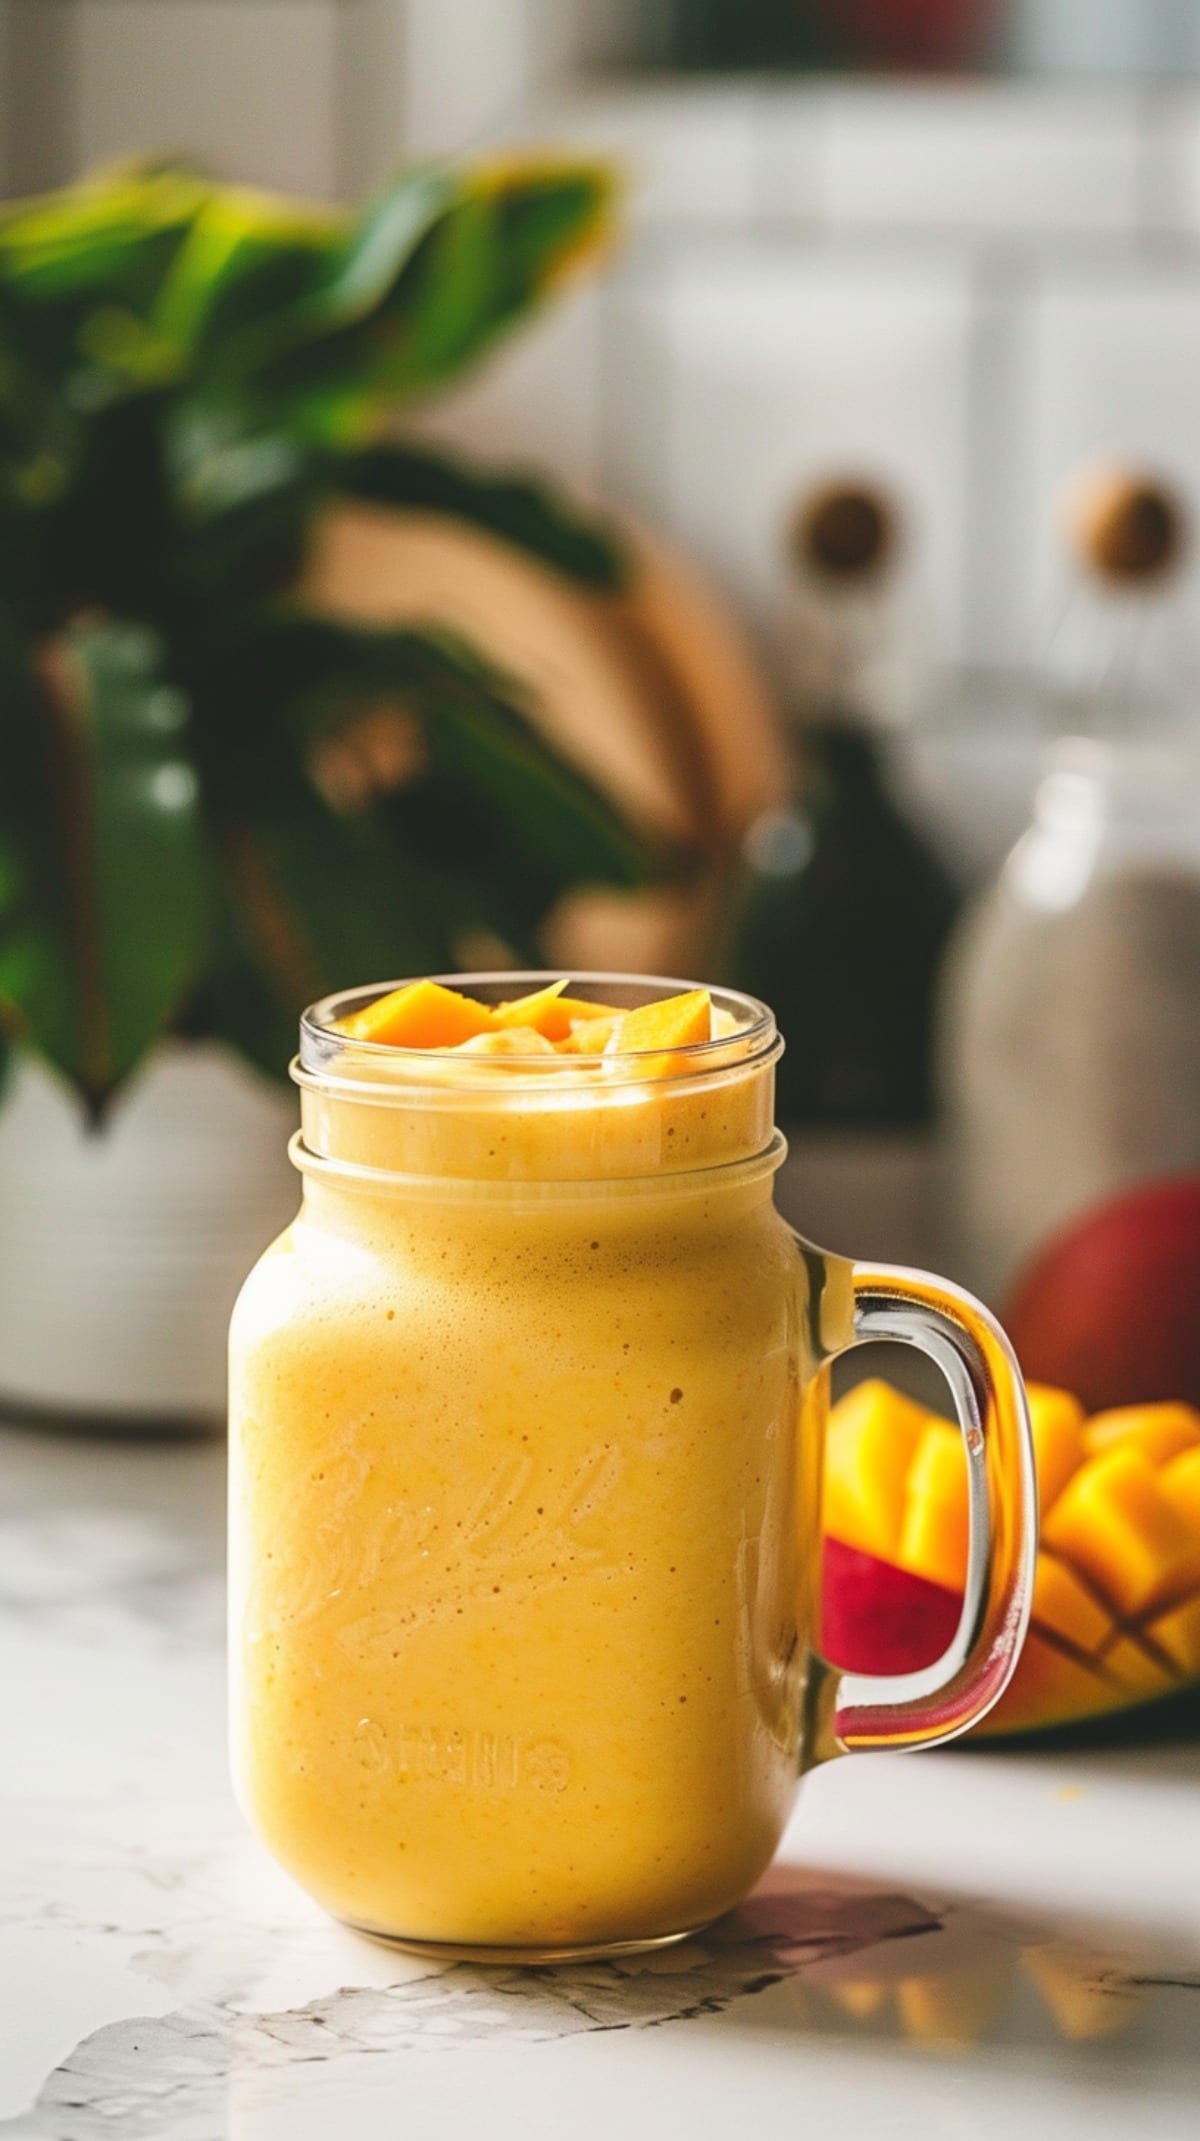 Creamy mango milkshake on a counter with fresh mango